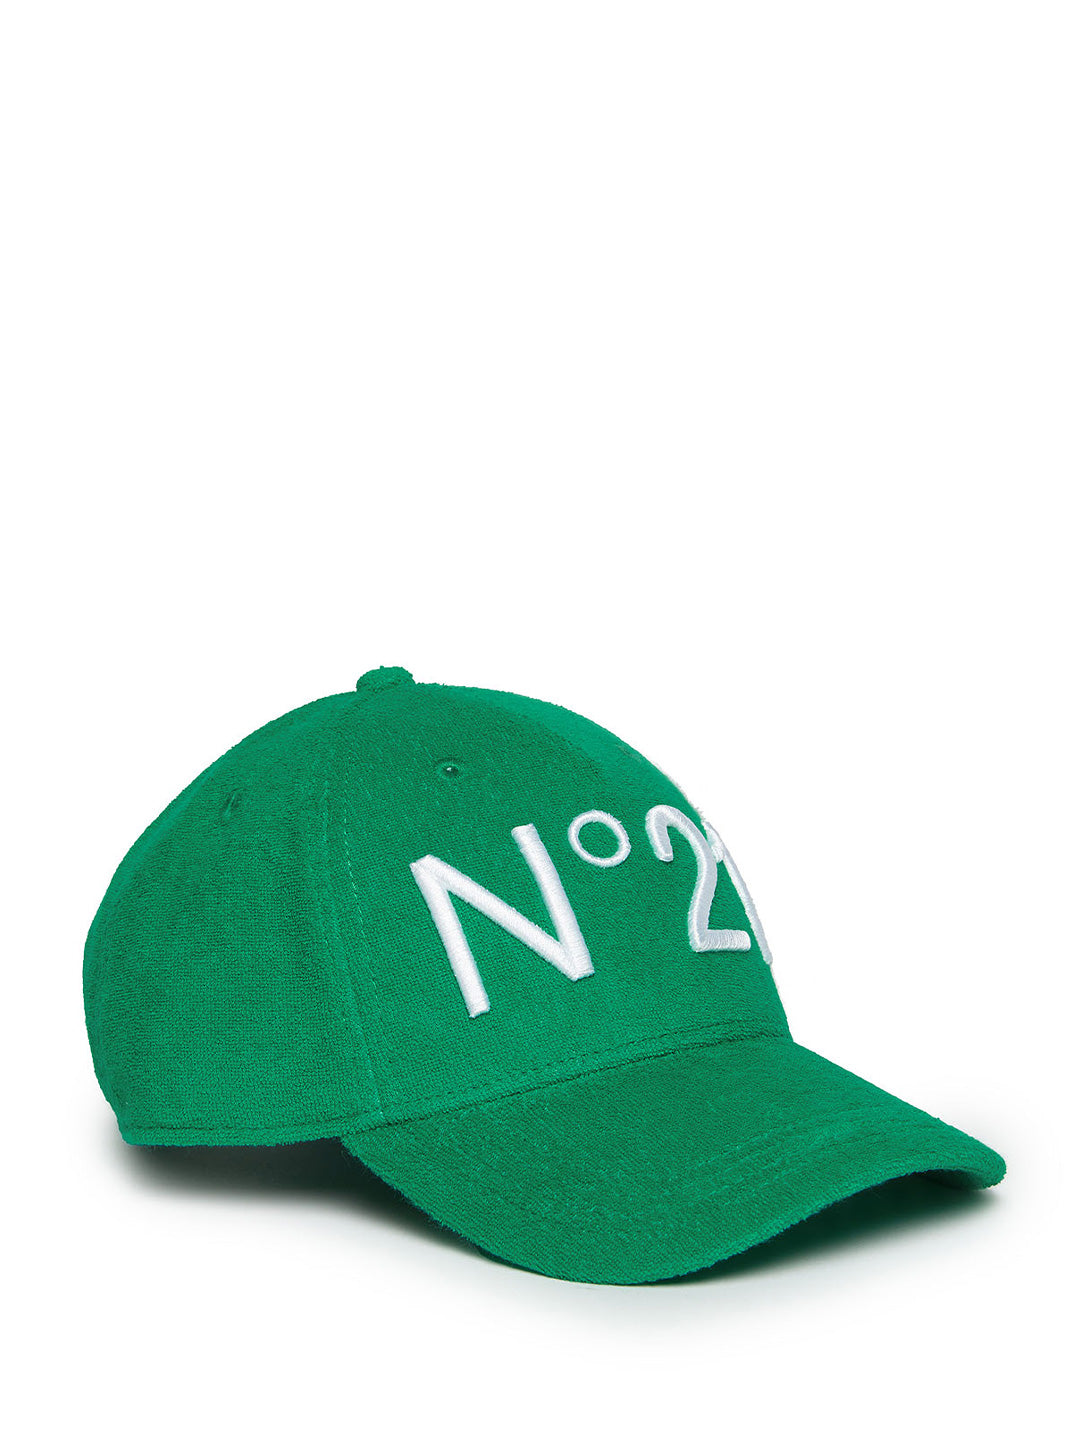 N°21 cappello kids verde con logo in contrasto